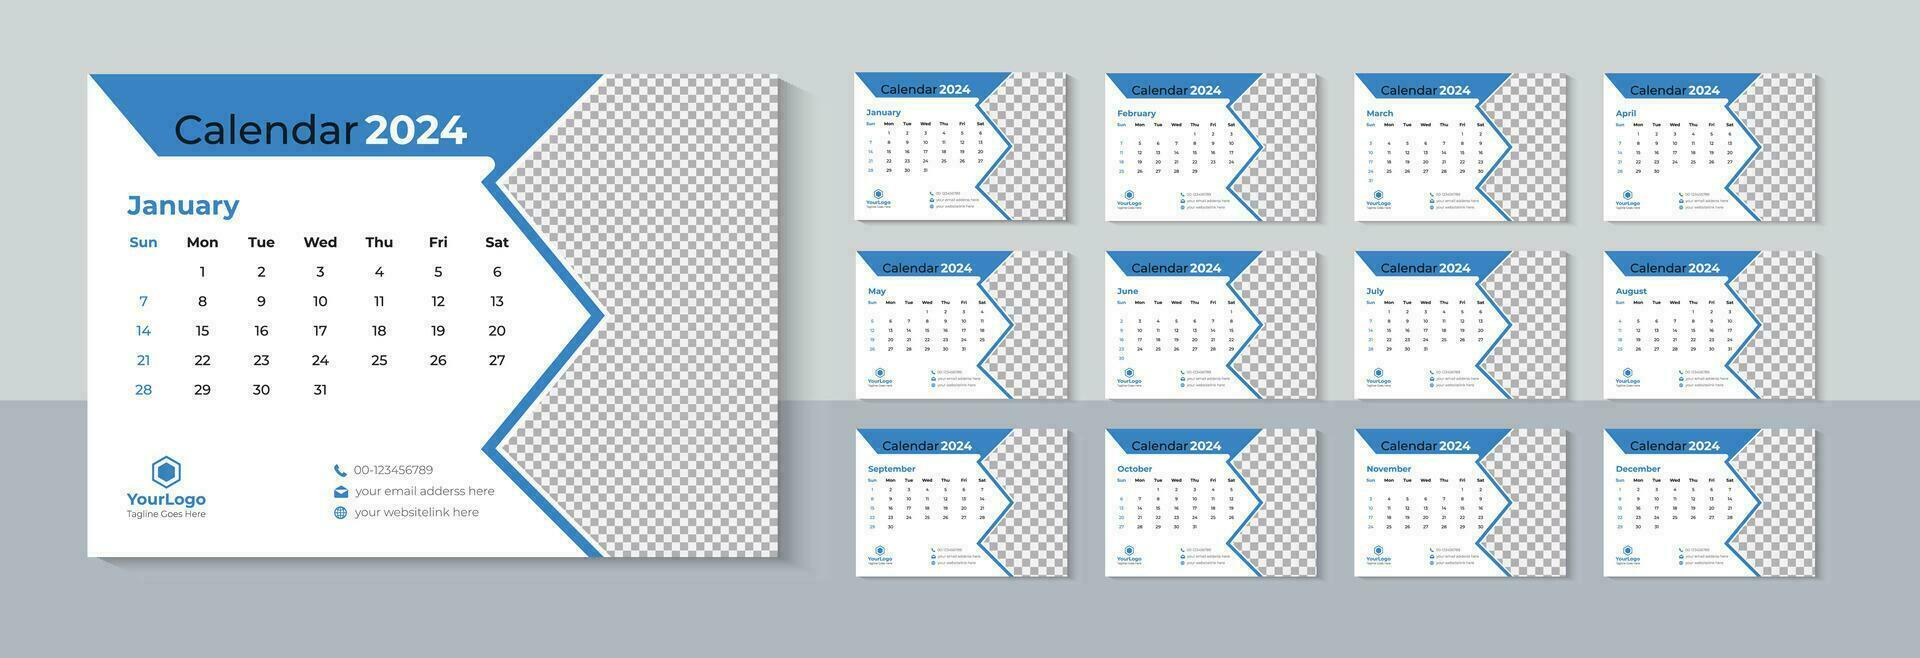 escritorio calendario 2024 diseño, negocio calendario 2024 plantilla, nuevo año 2024, mesa calendario, 12 meses incluido, gratis descargar vector